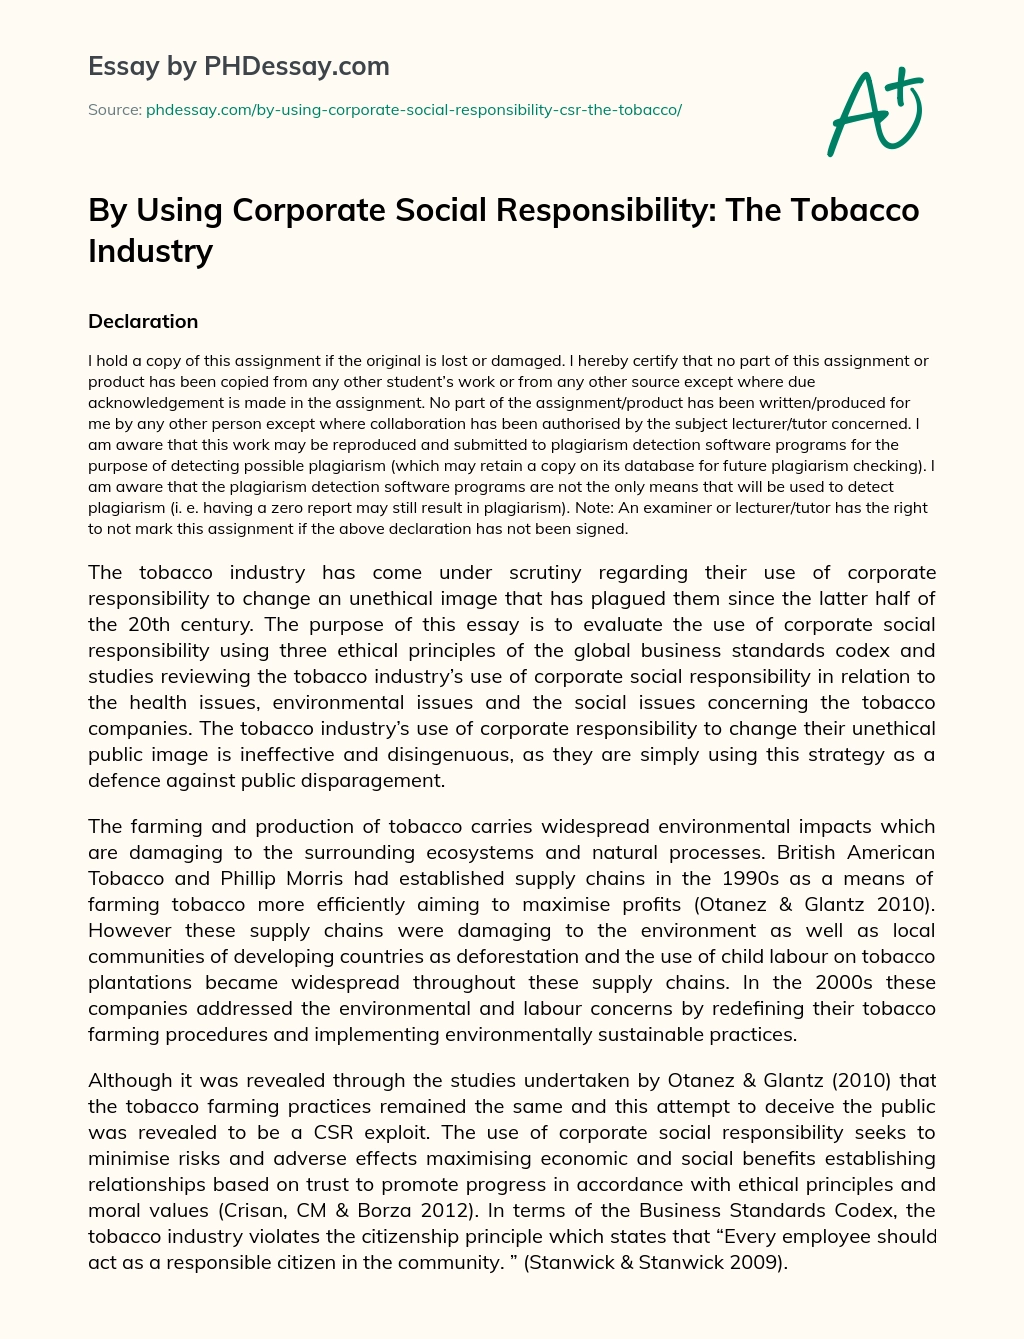 tobacco industry essay